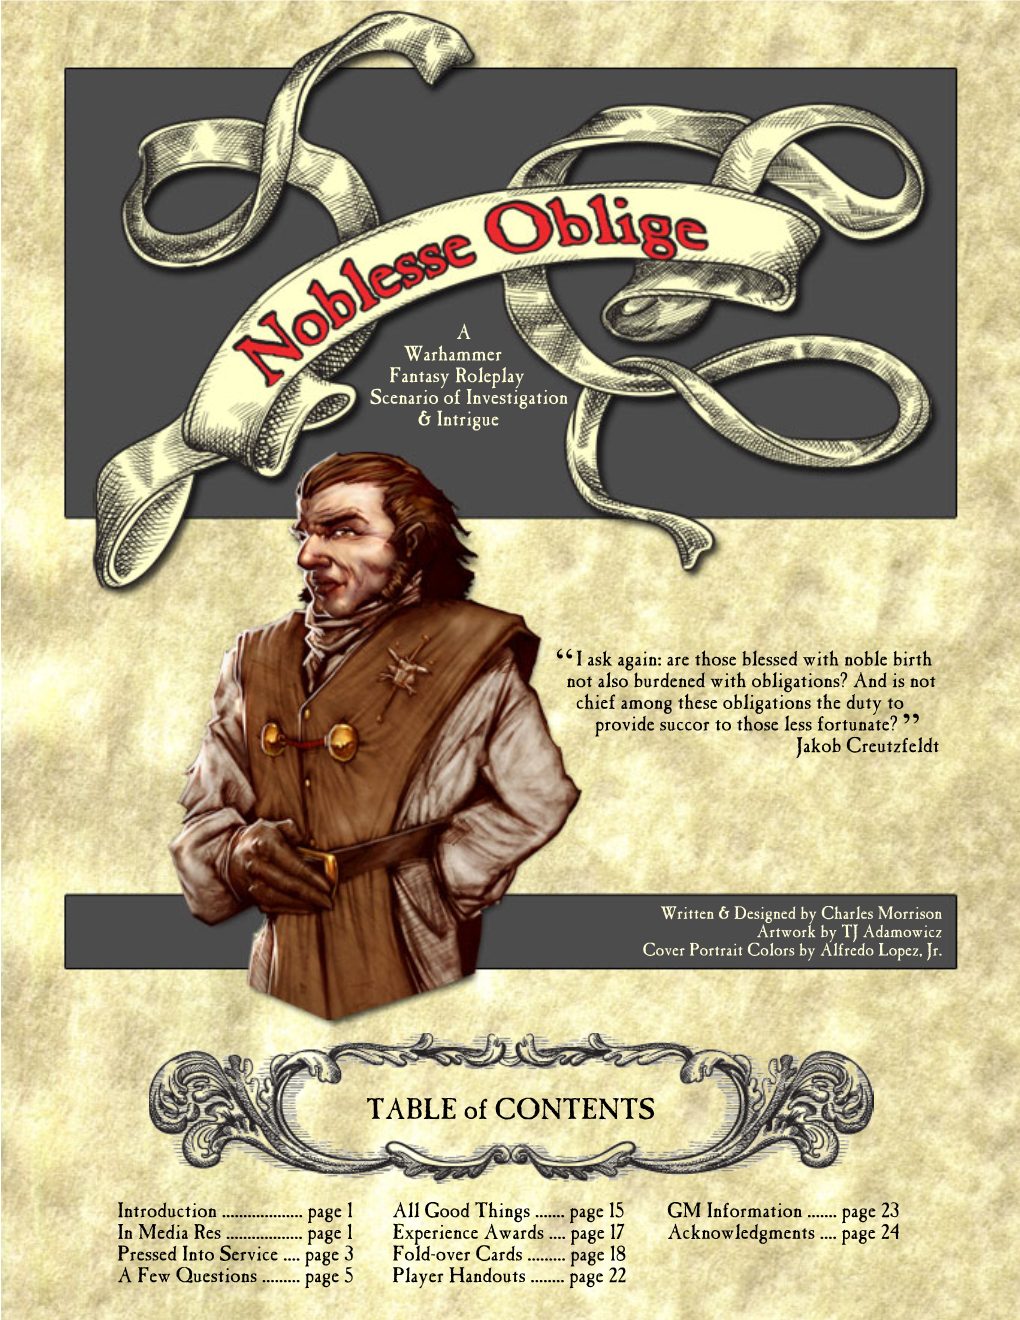 Noblesse Oblige Is a Non-Linear, Investigative Adventure to Kill a Prominent Durrenbach Presents Itself